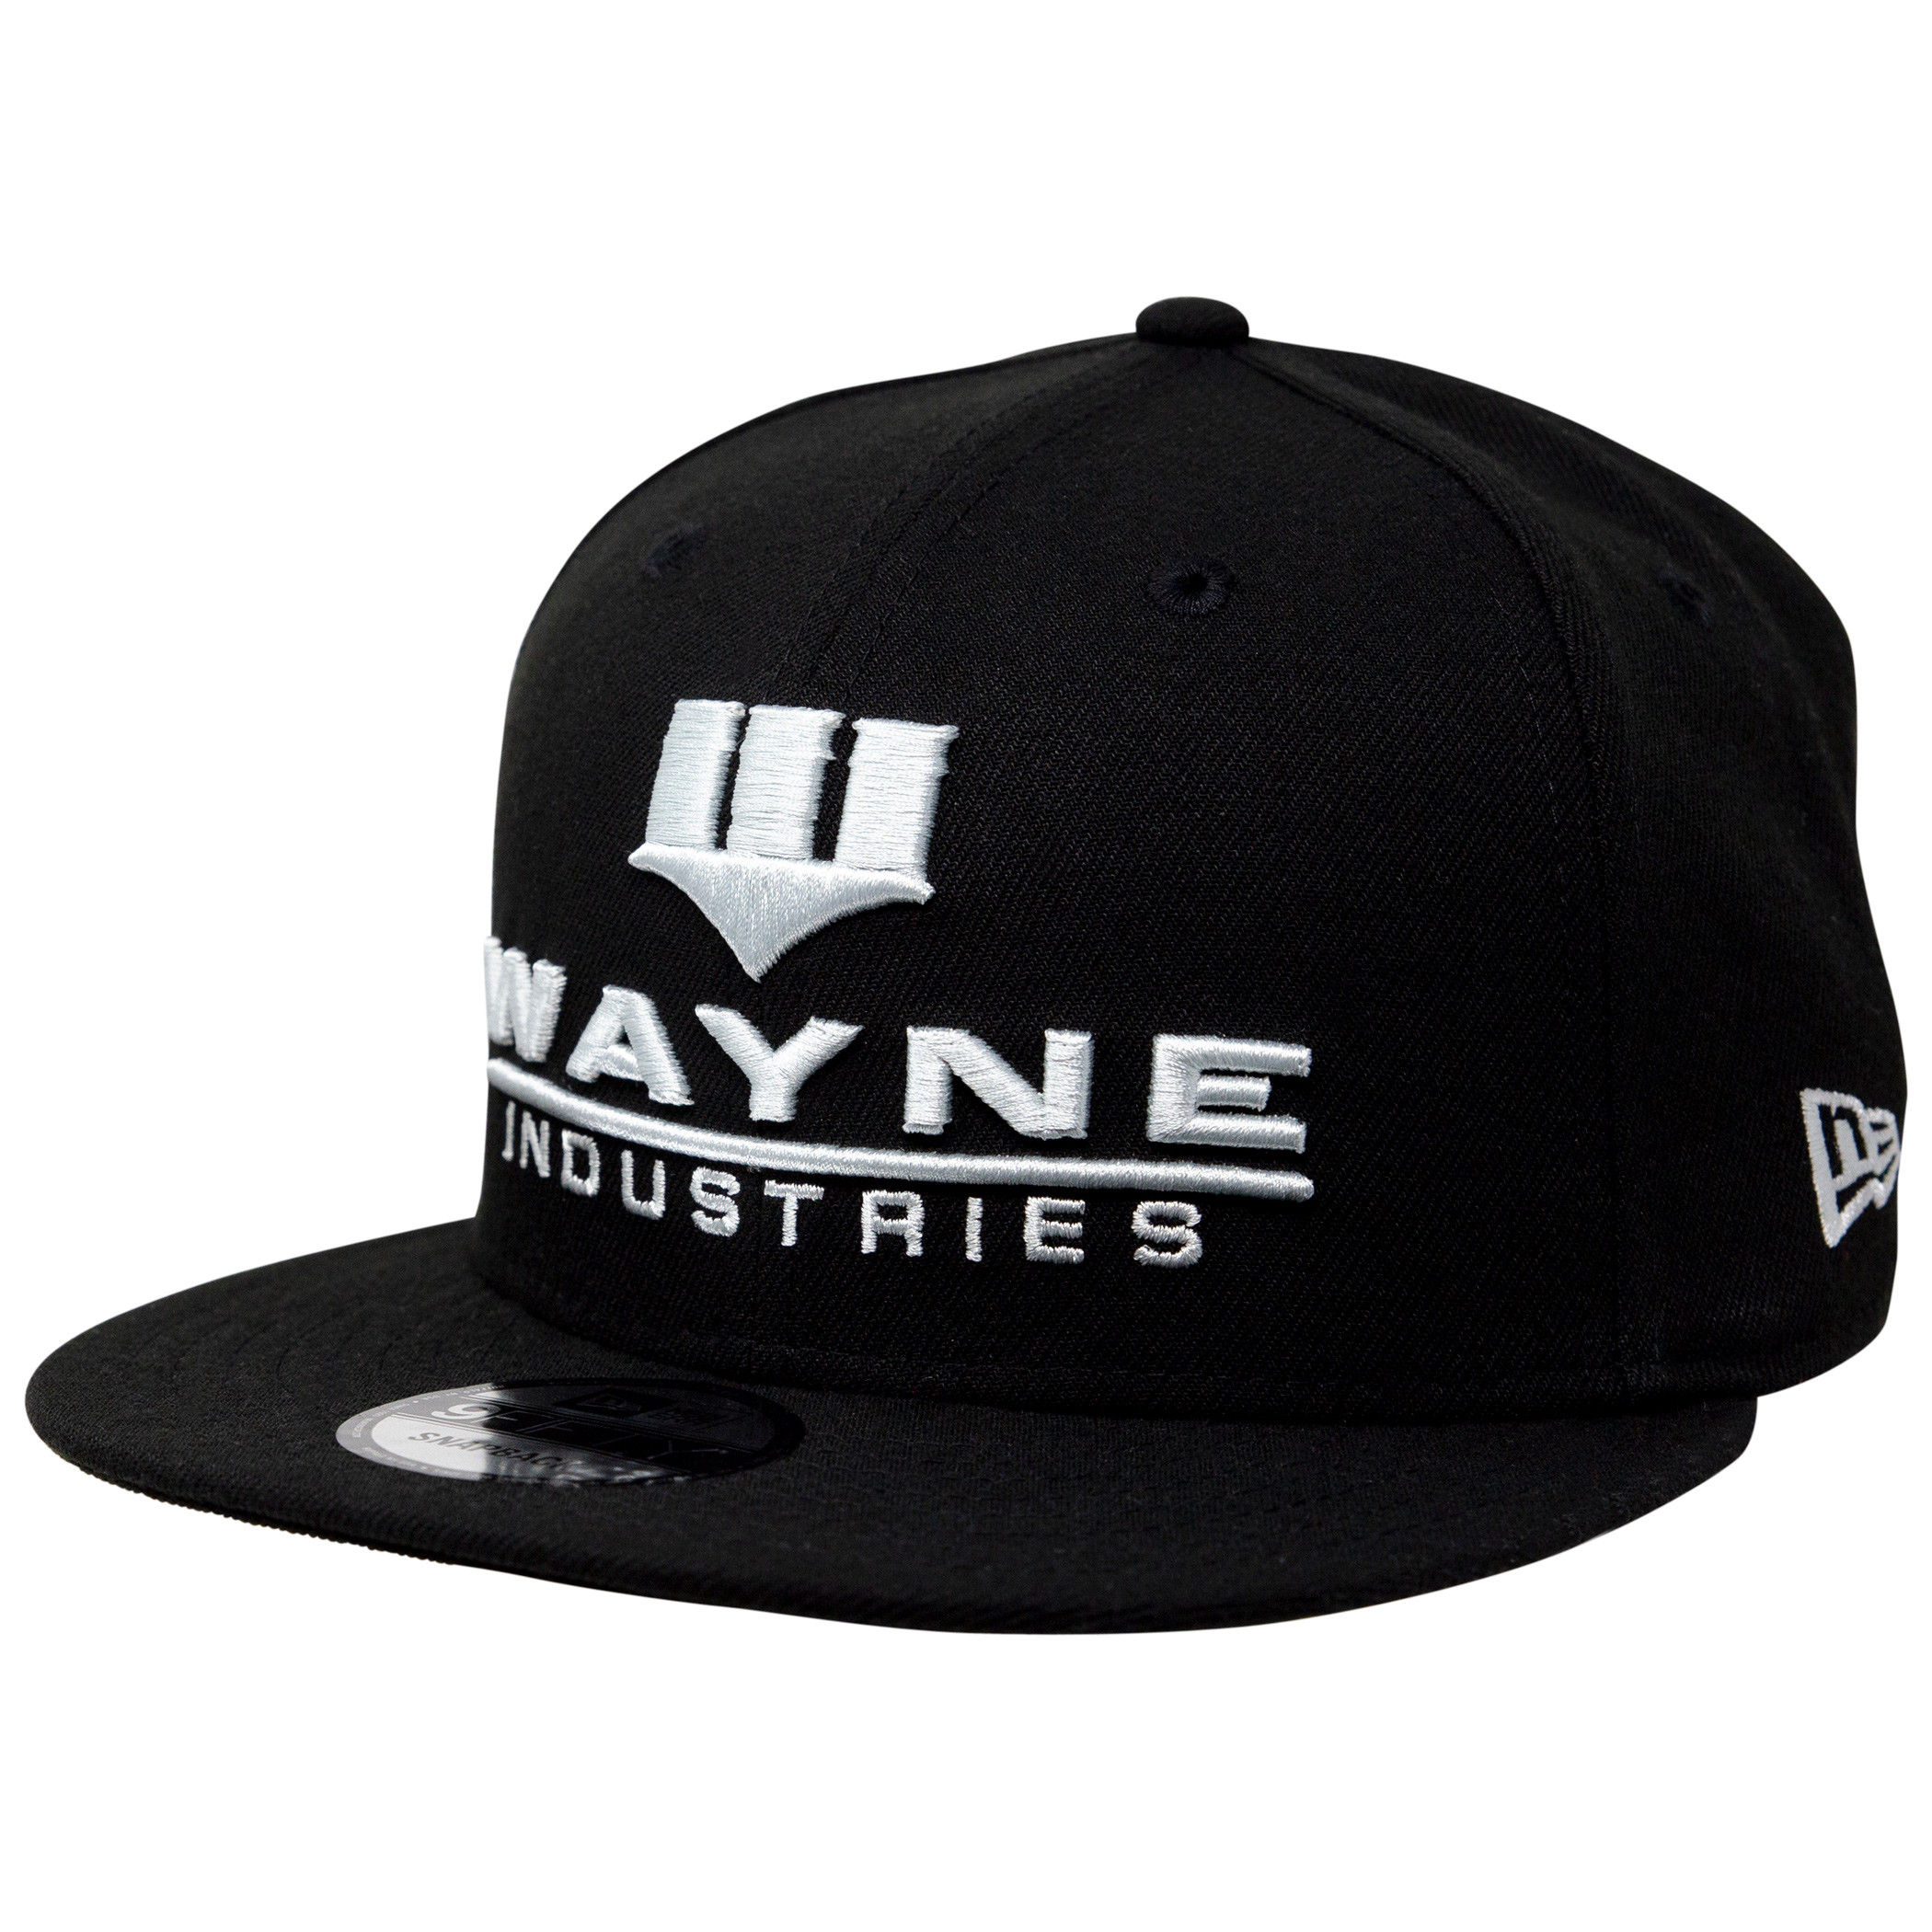 Batman Wayne Industries New Era 9Fifty Adjustable Hat